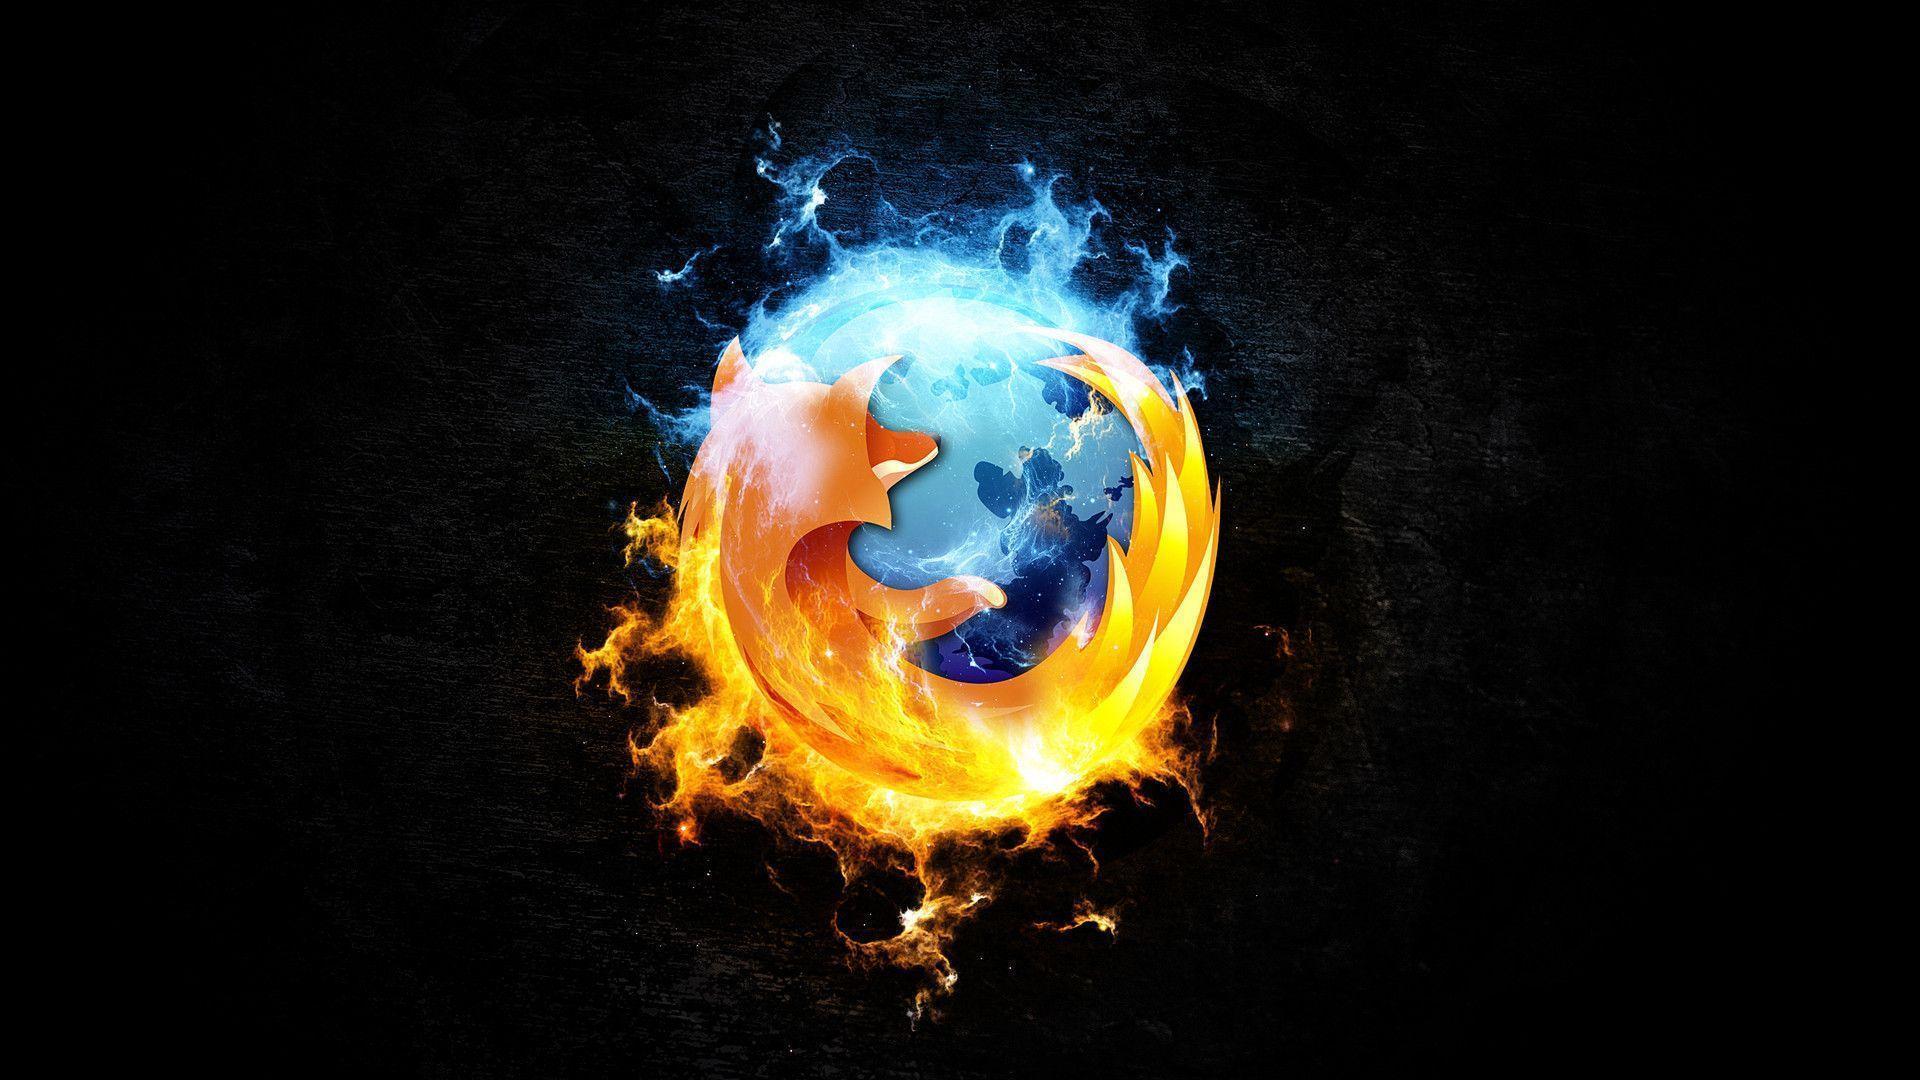 Firefox Wallpapers